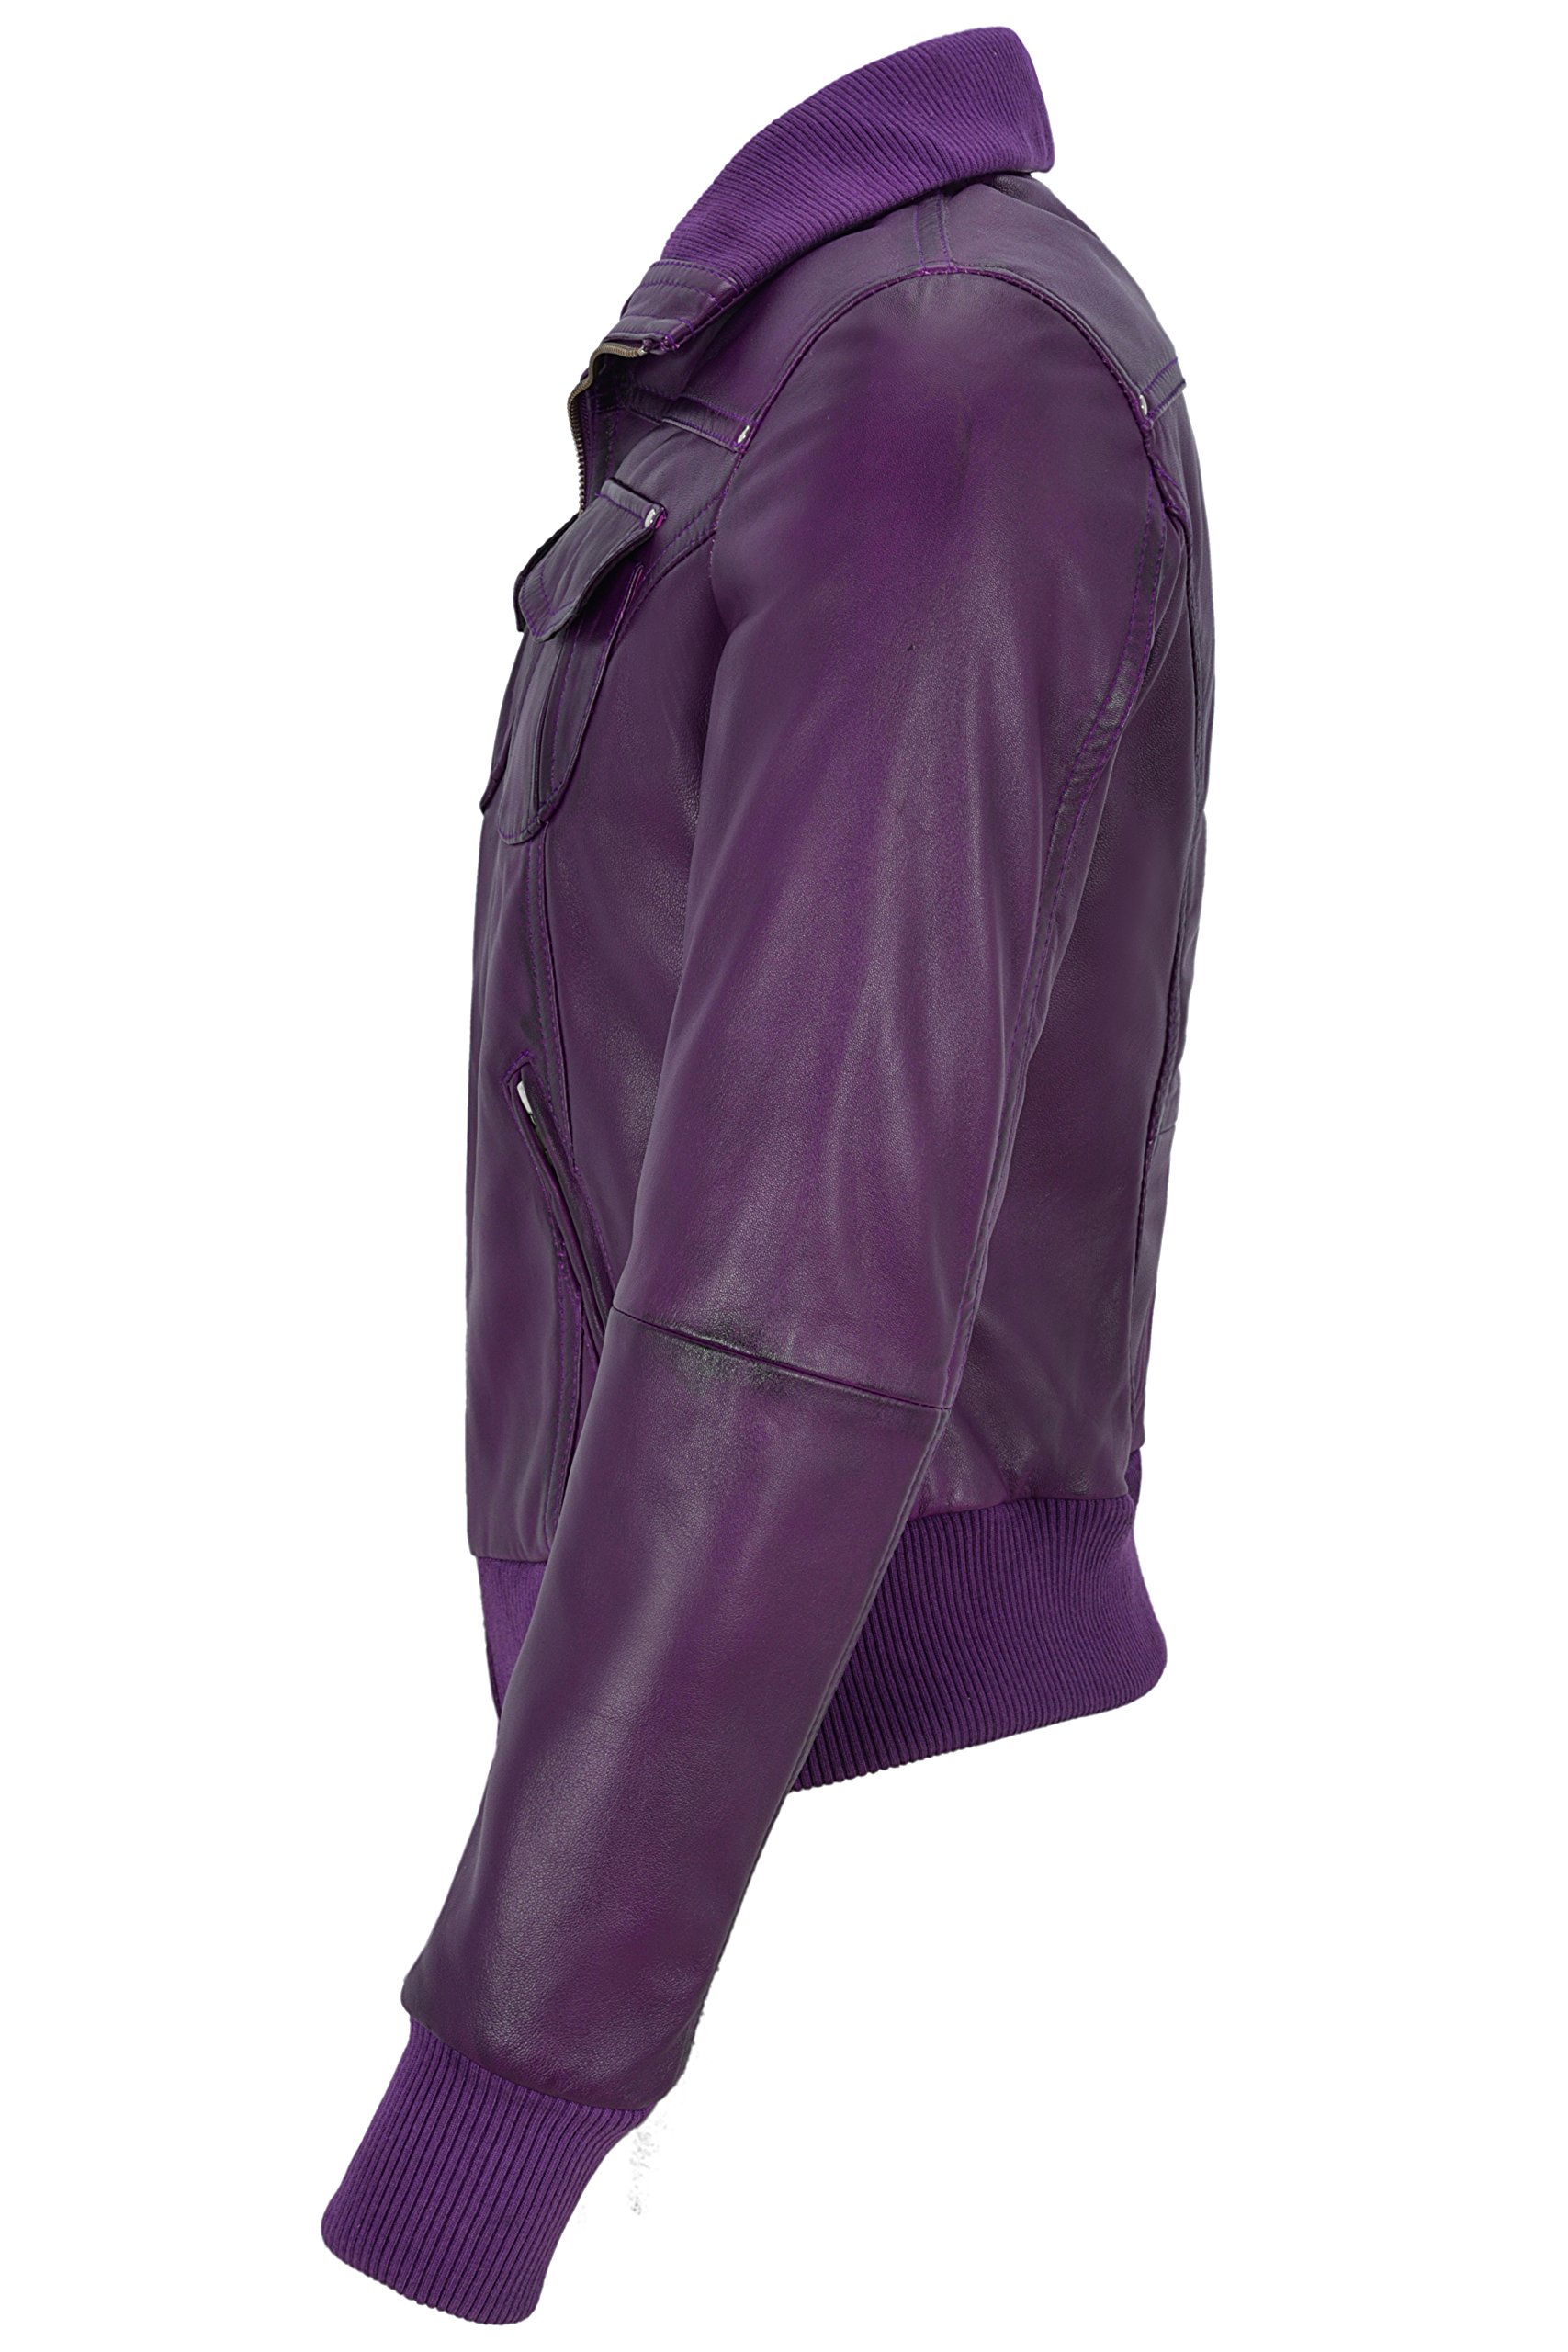 Winner leather look bomber jacket purple